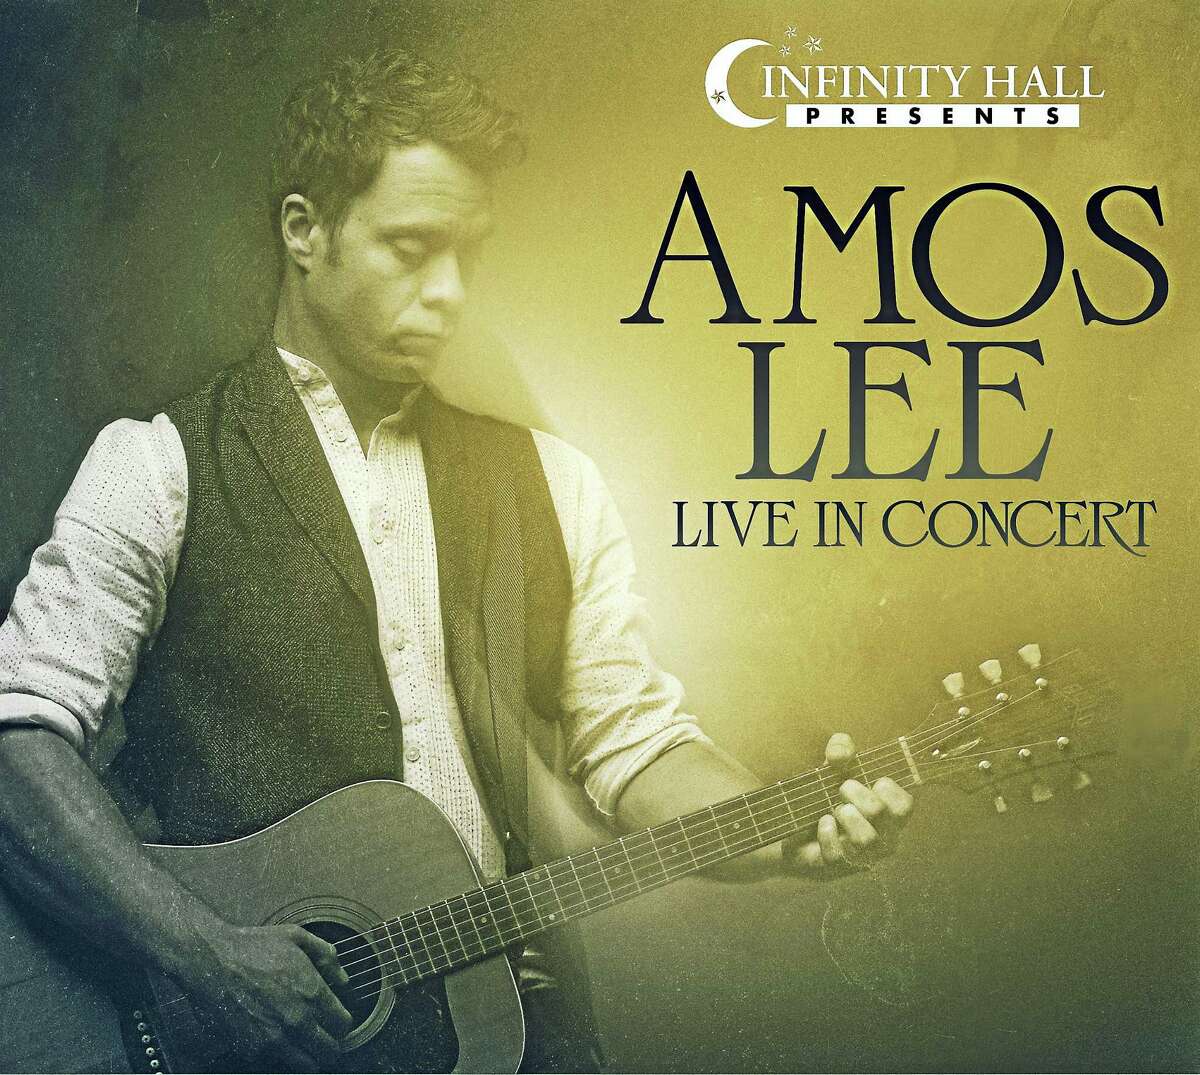 Torrington: Amos Lee concert Sept. 7